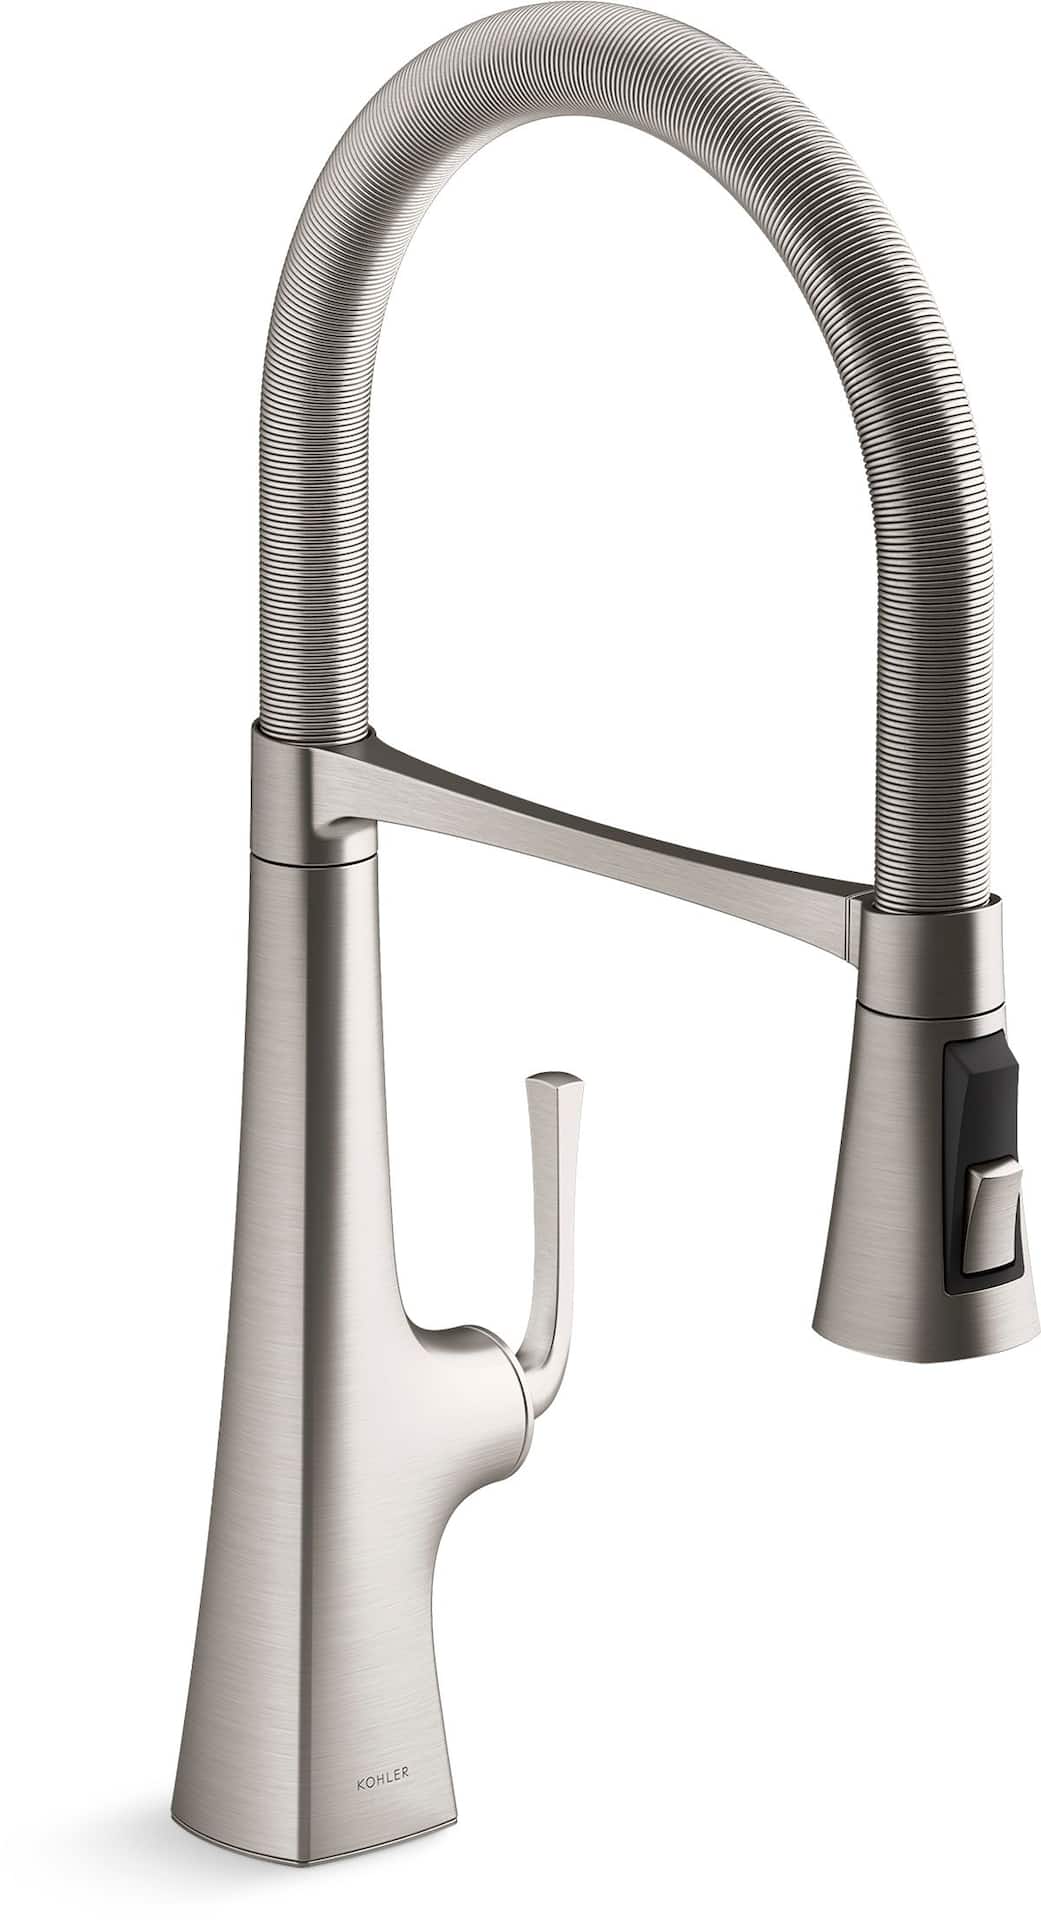 Danze Smartsense 1-Handle Kitchen Pull-Down Faucet, Matte Black